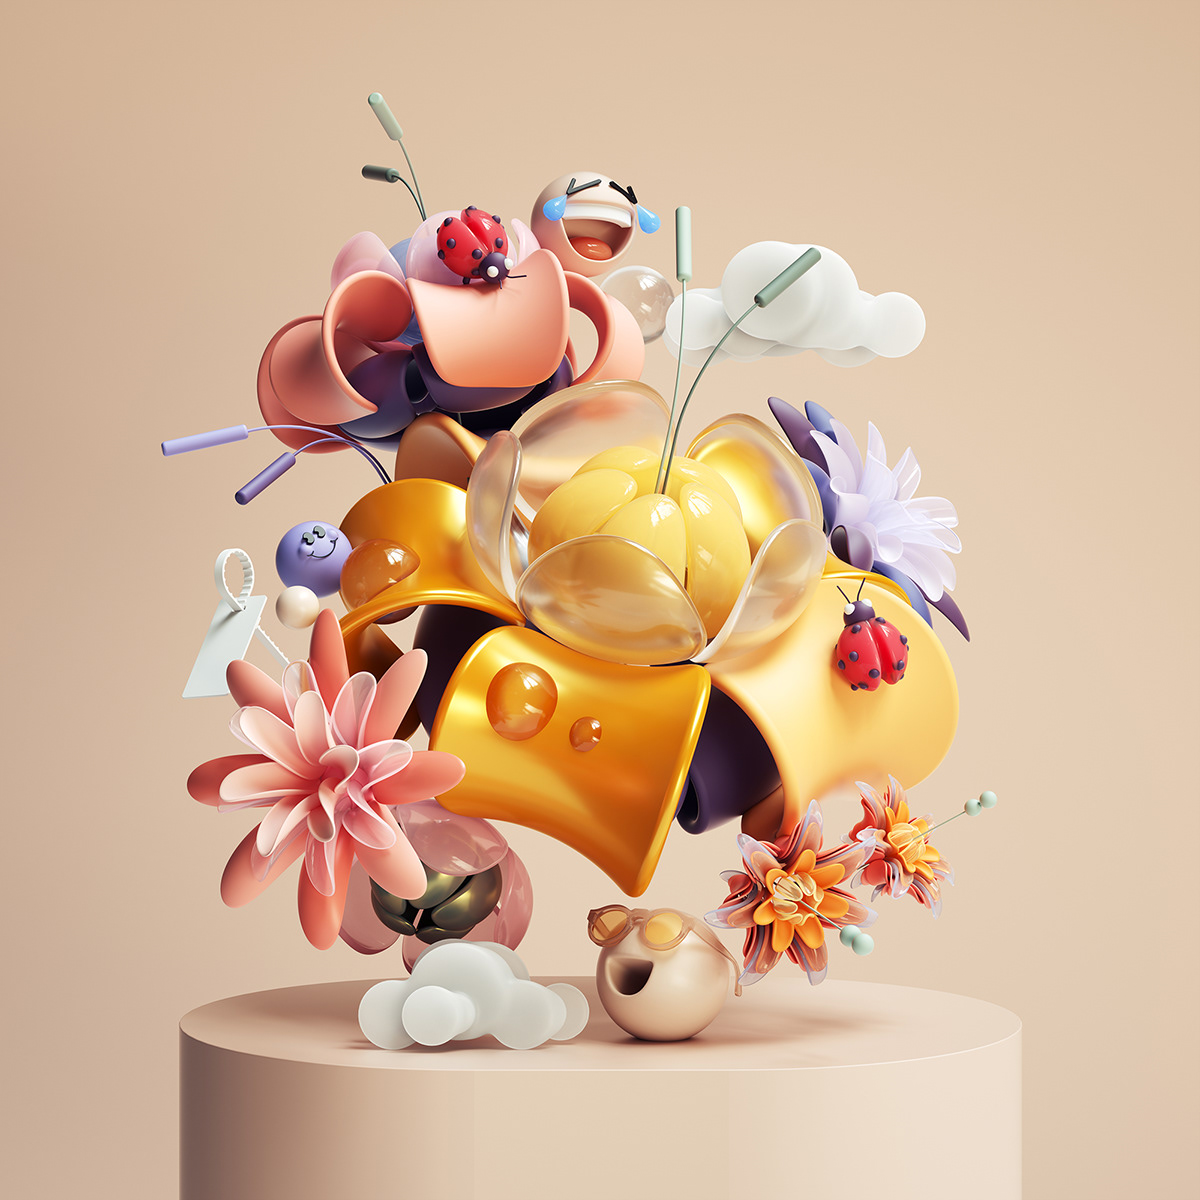 3D Floral Compositions - Dr Wong - Emporium of Tings. Web Magazine.